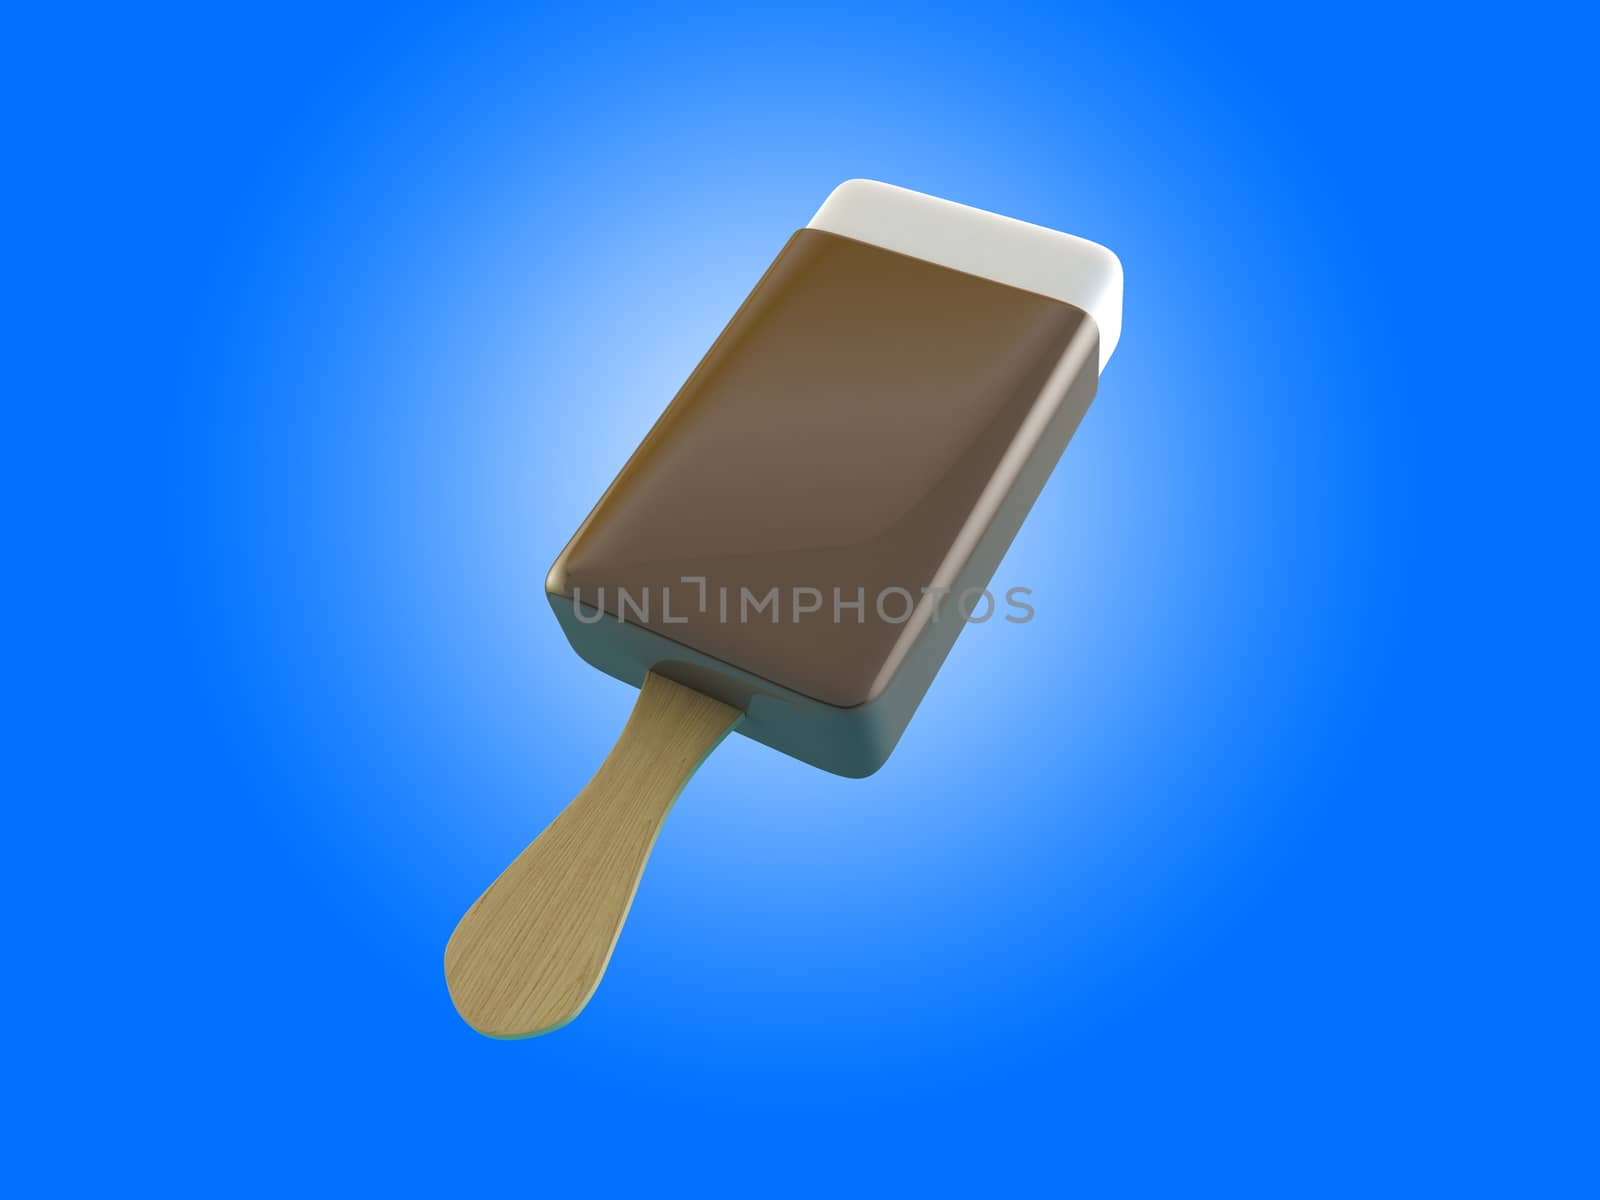 Chocolate ice cream 3d Illustrations on light blue background.